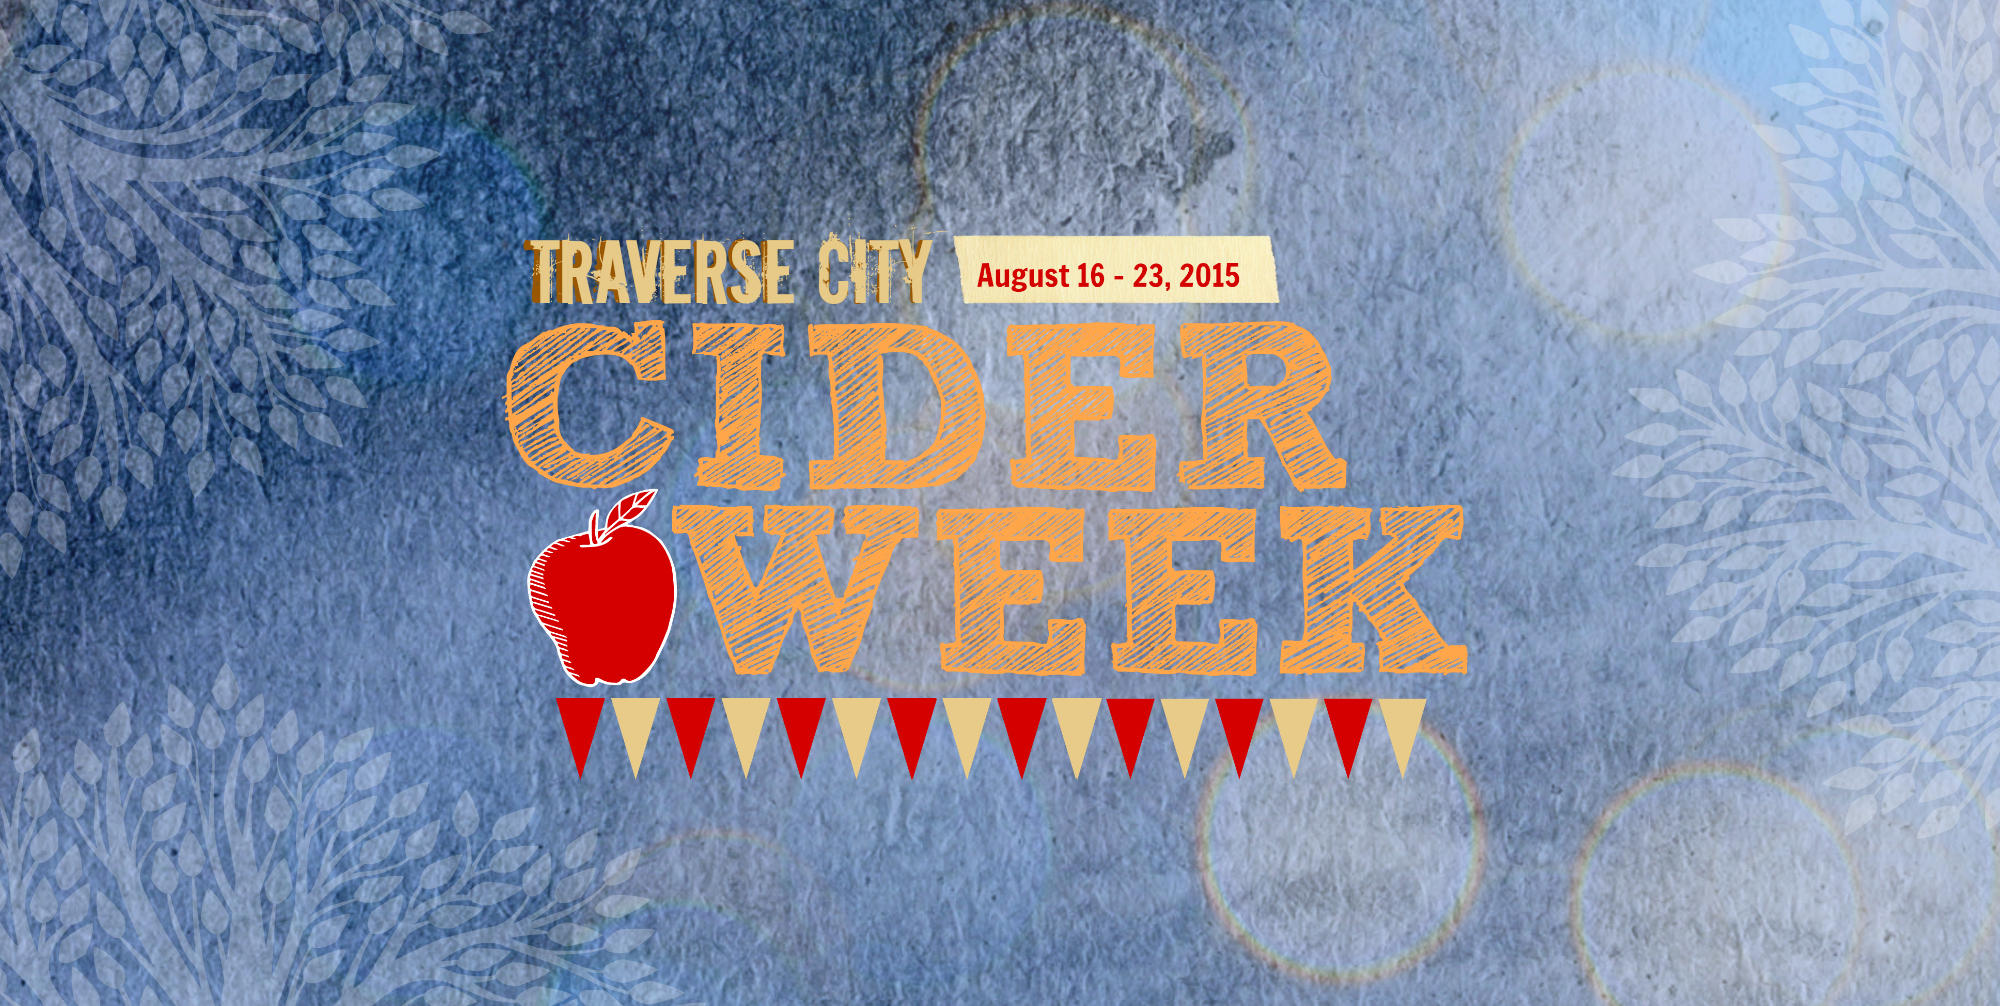 Find Starcut Ciders During Traverse City Cider Week